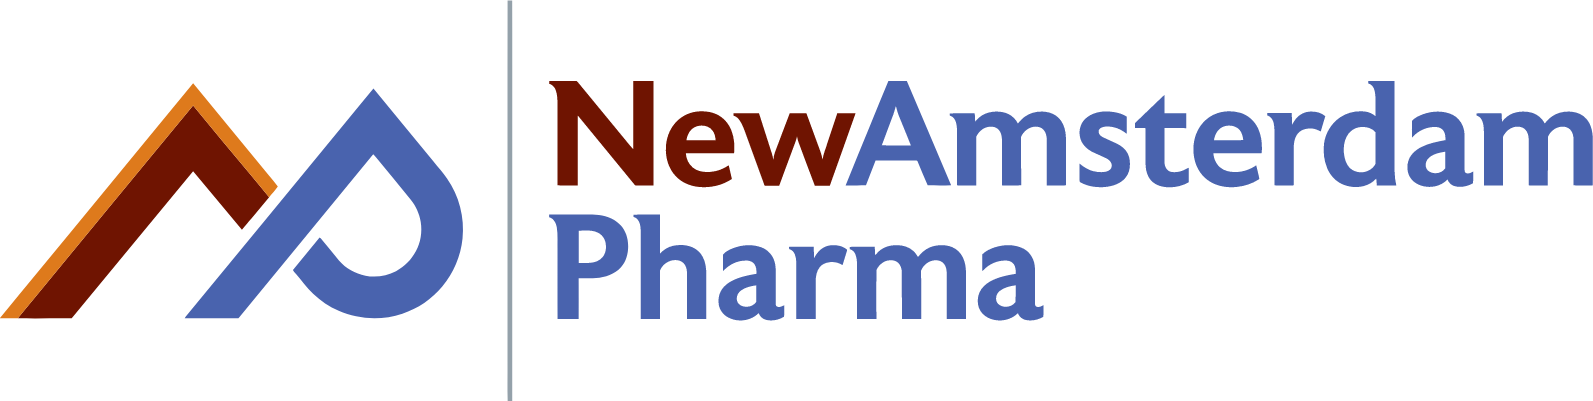 NewAmsterdam Pharma Company logo large (transparent PNG)